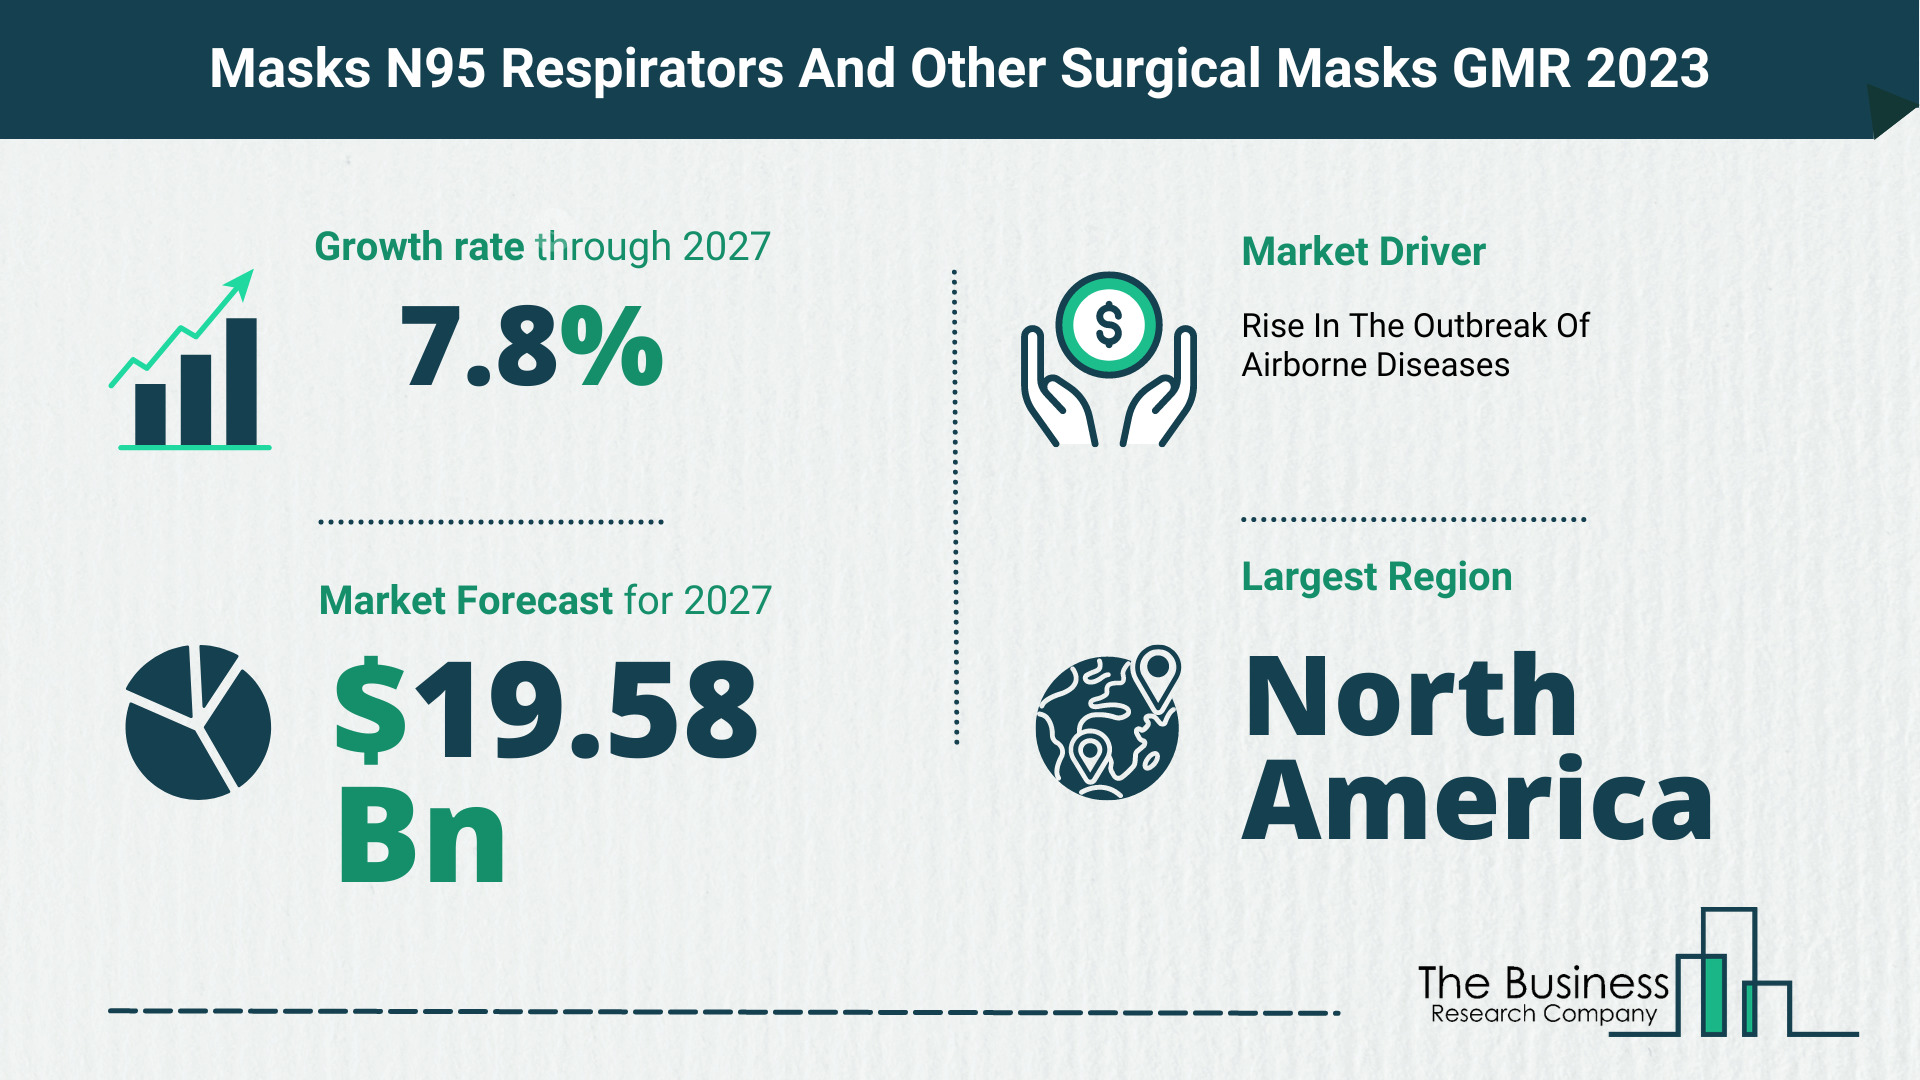 Global Masks N95 Respirators And Other Surgical Masks Market Size